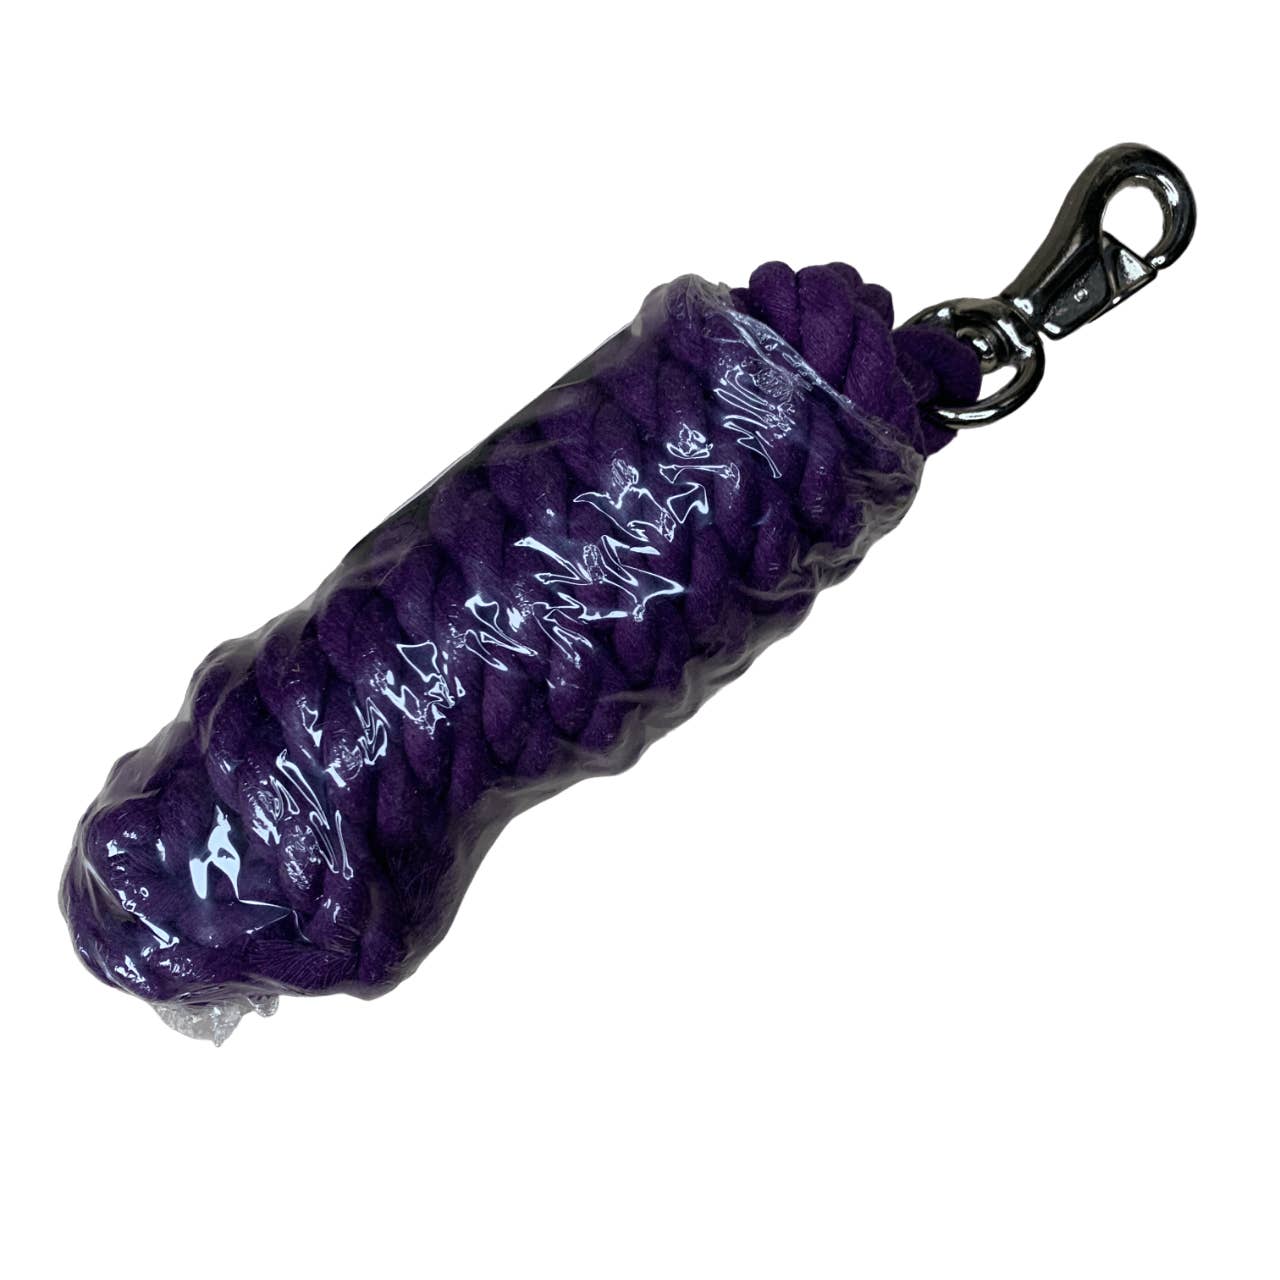 Cotton Lead Rope in Purple - 10'